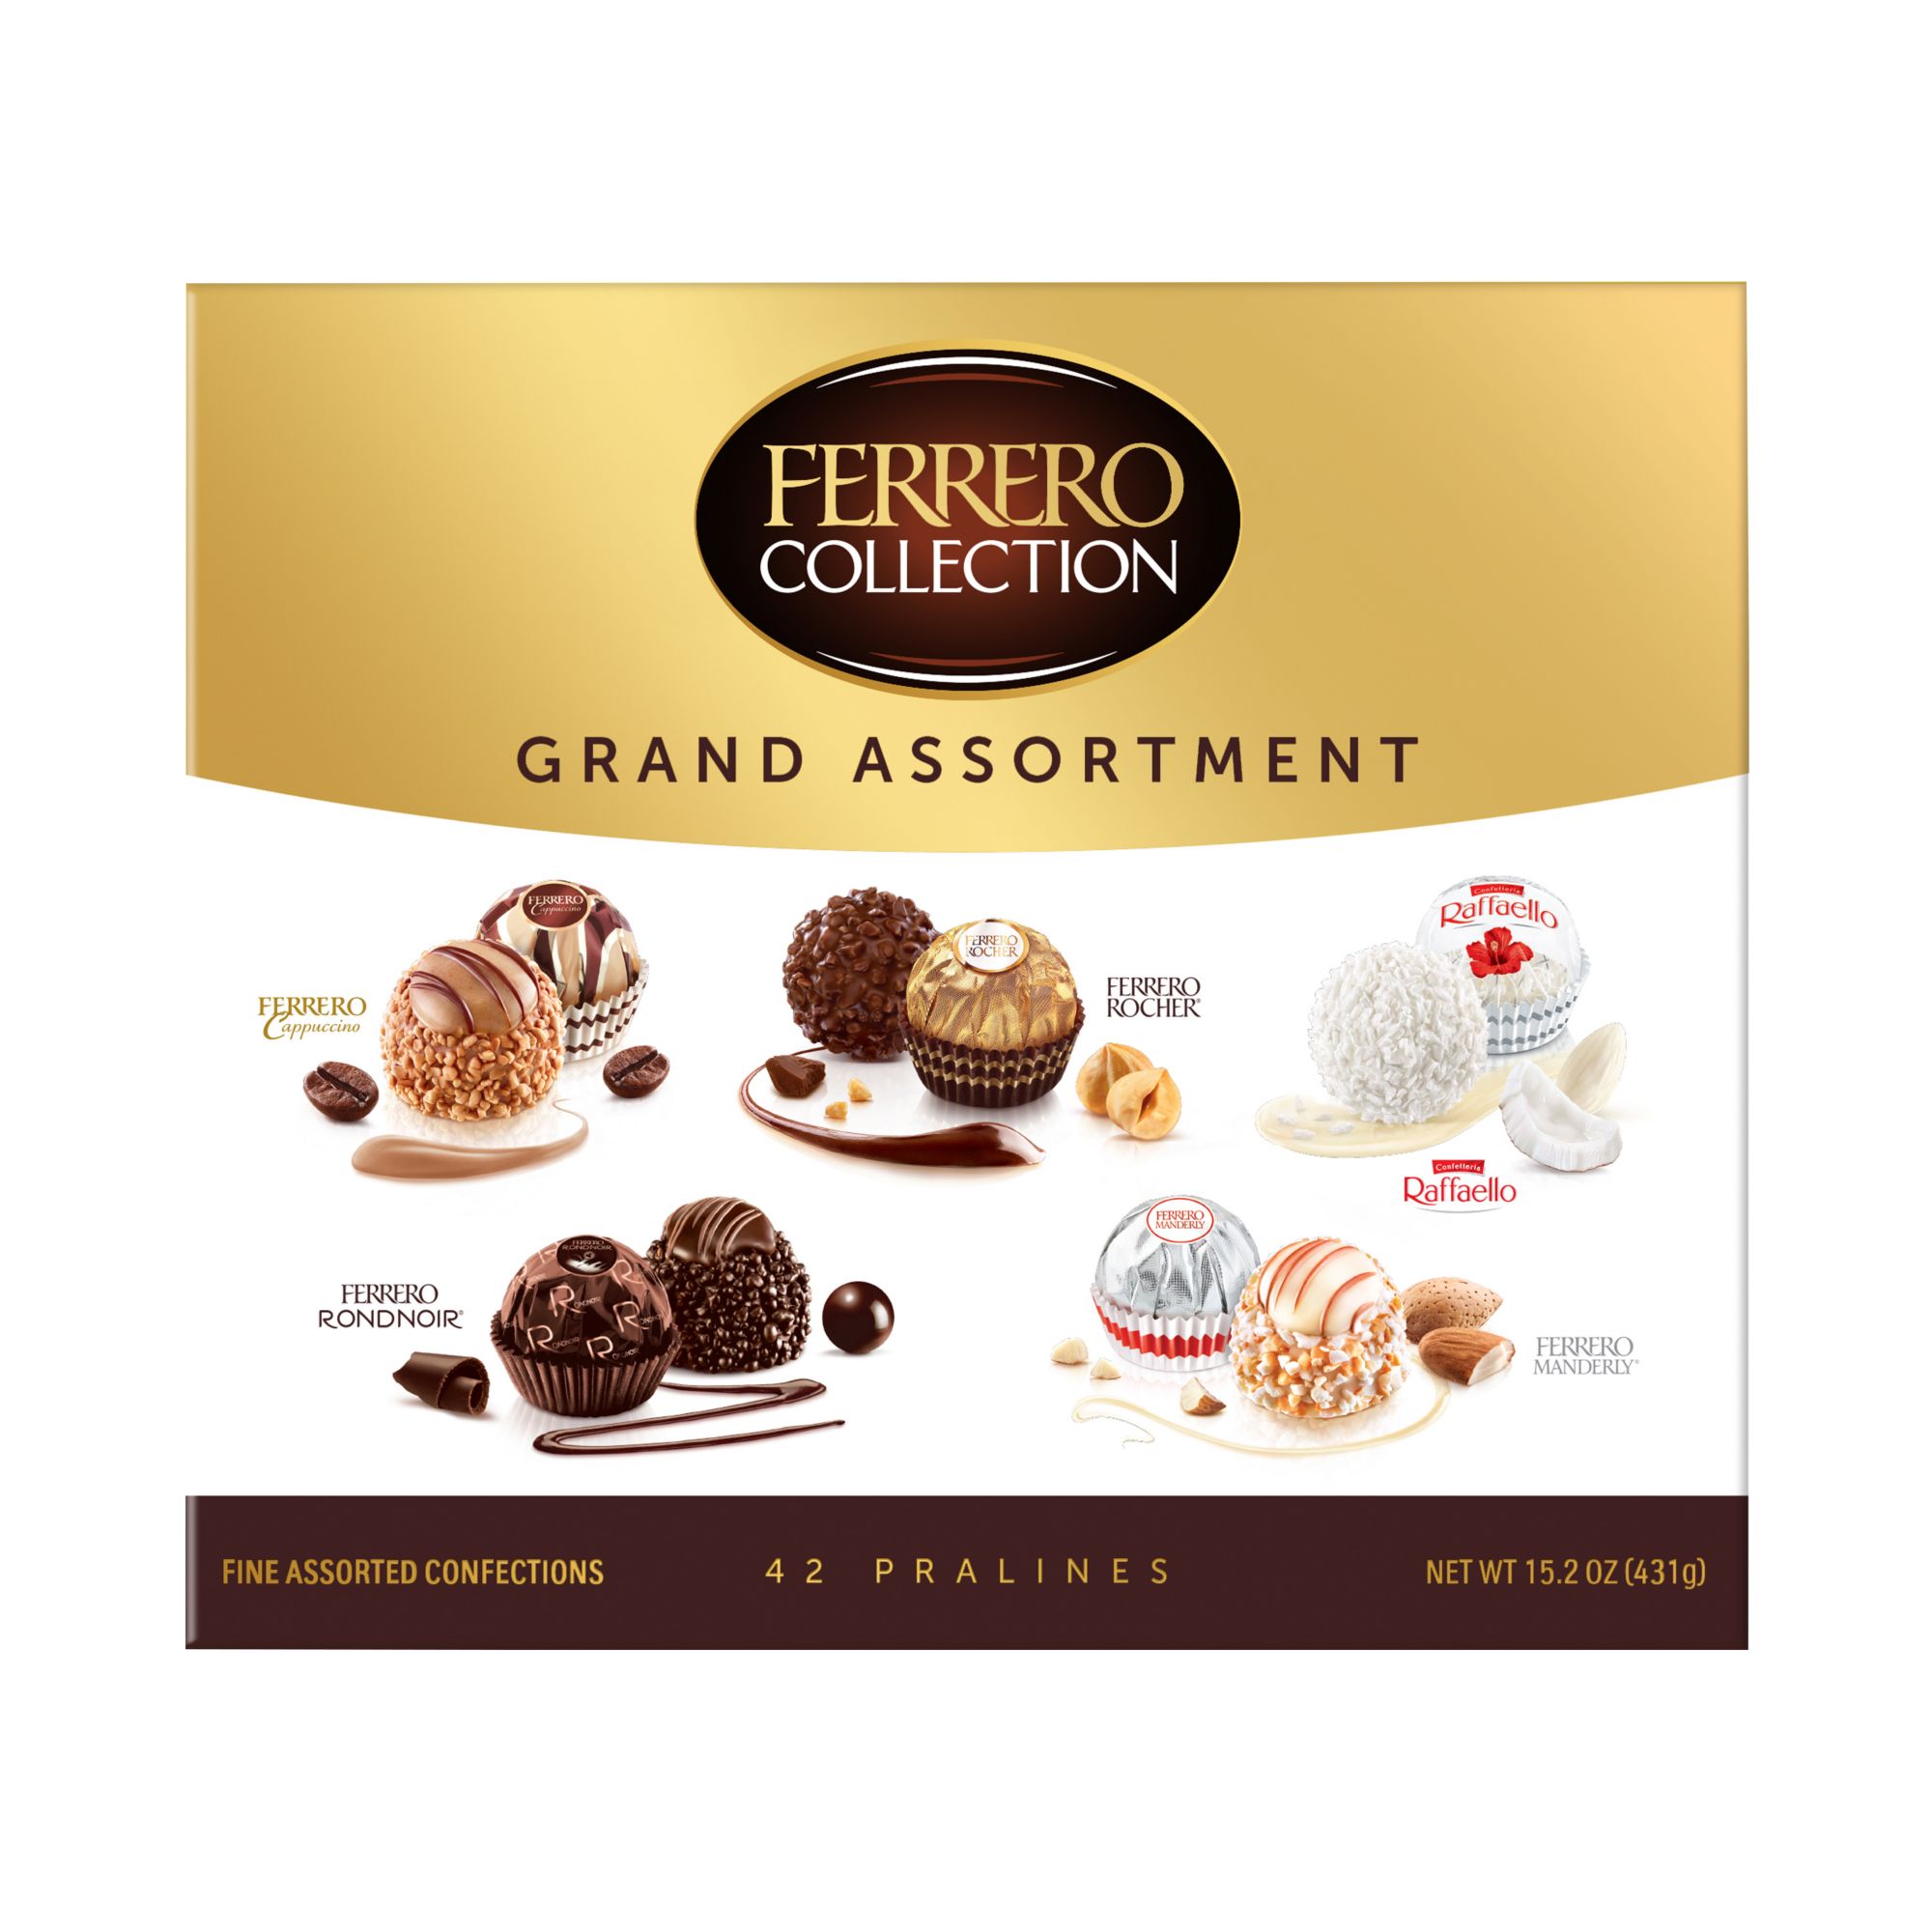 Ferrero stocks up on frozen desserts - Food & Drink Business